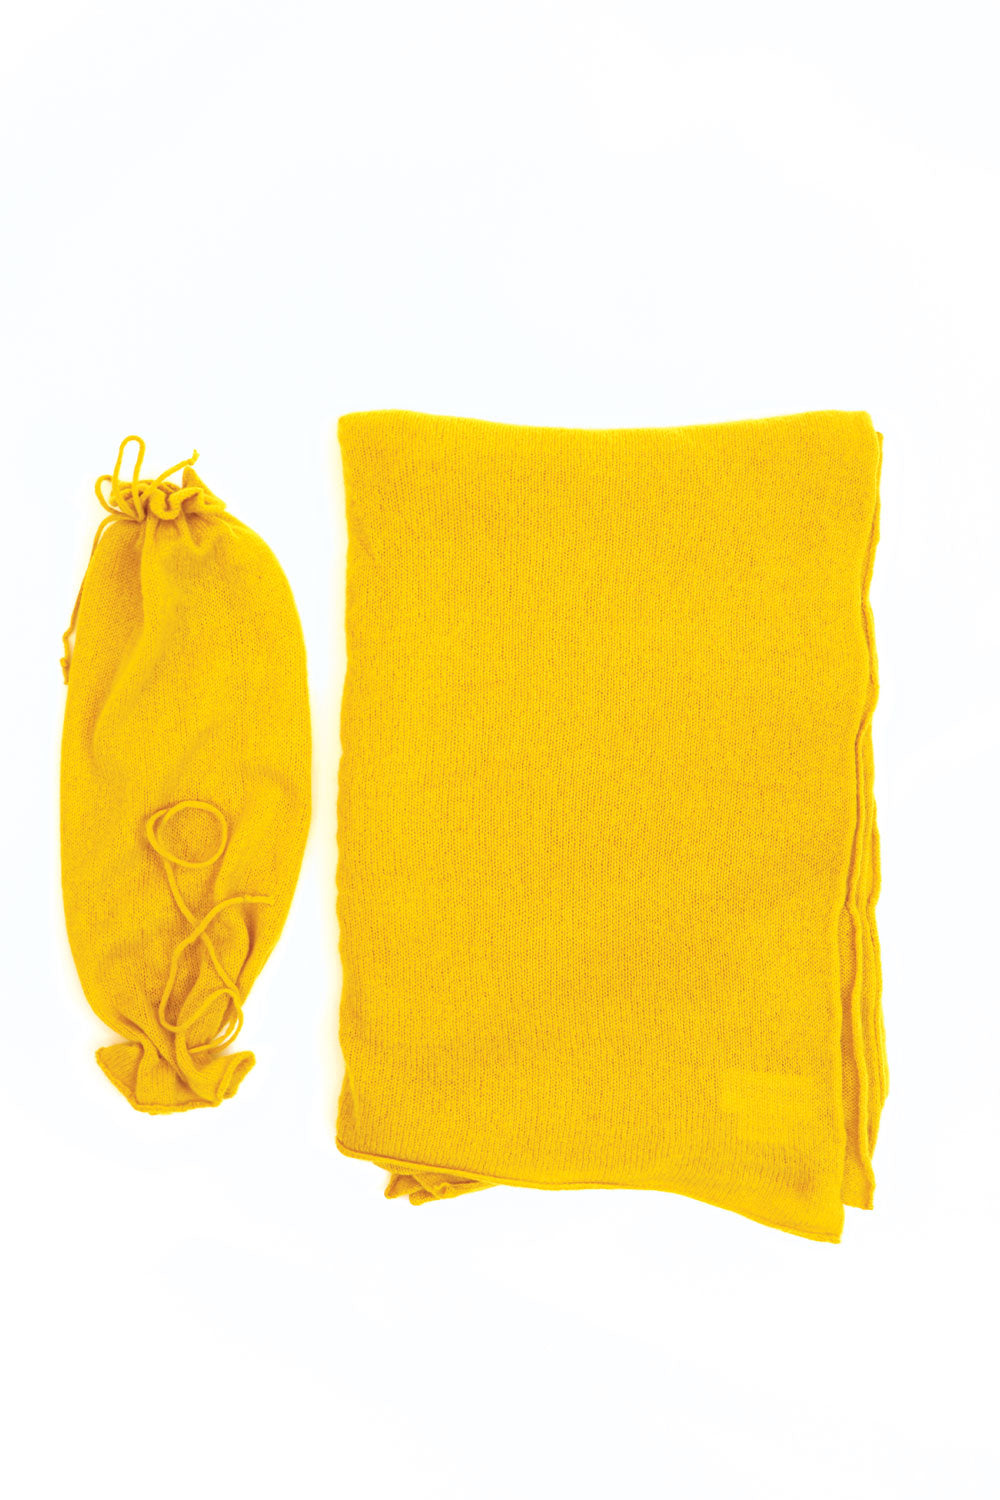 Cashmere Raw Edge Travel Wrap in Turmeric Yellow